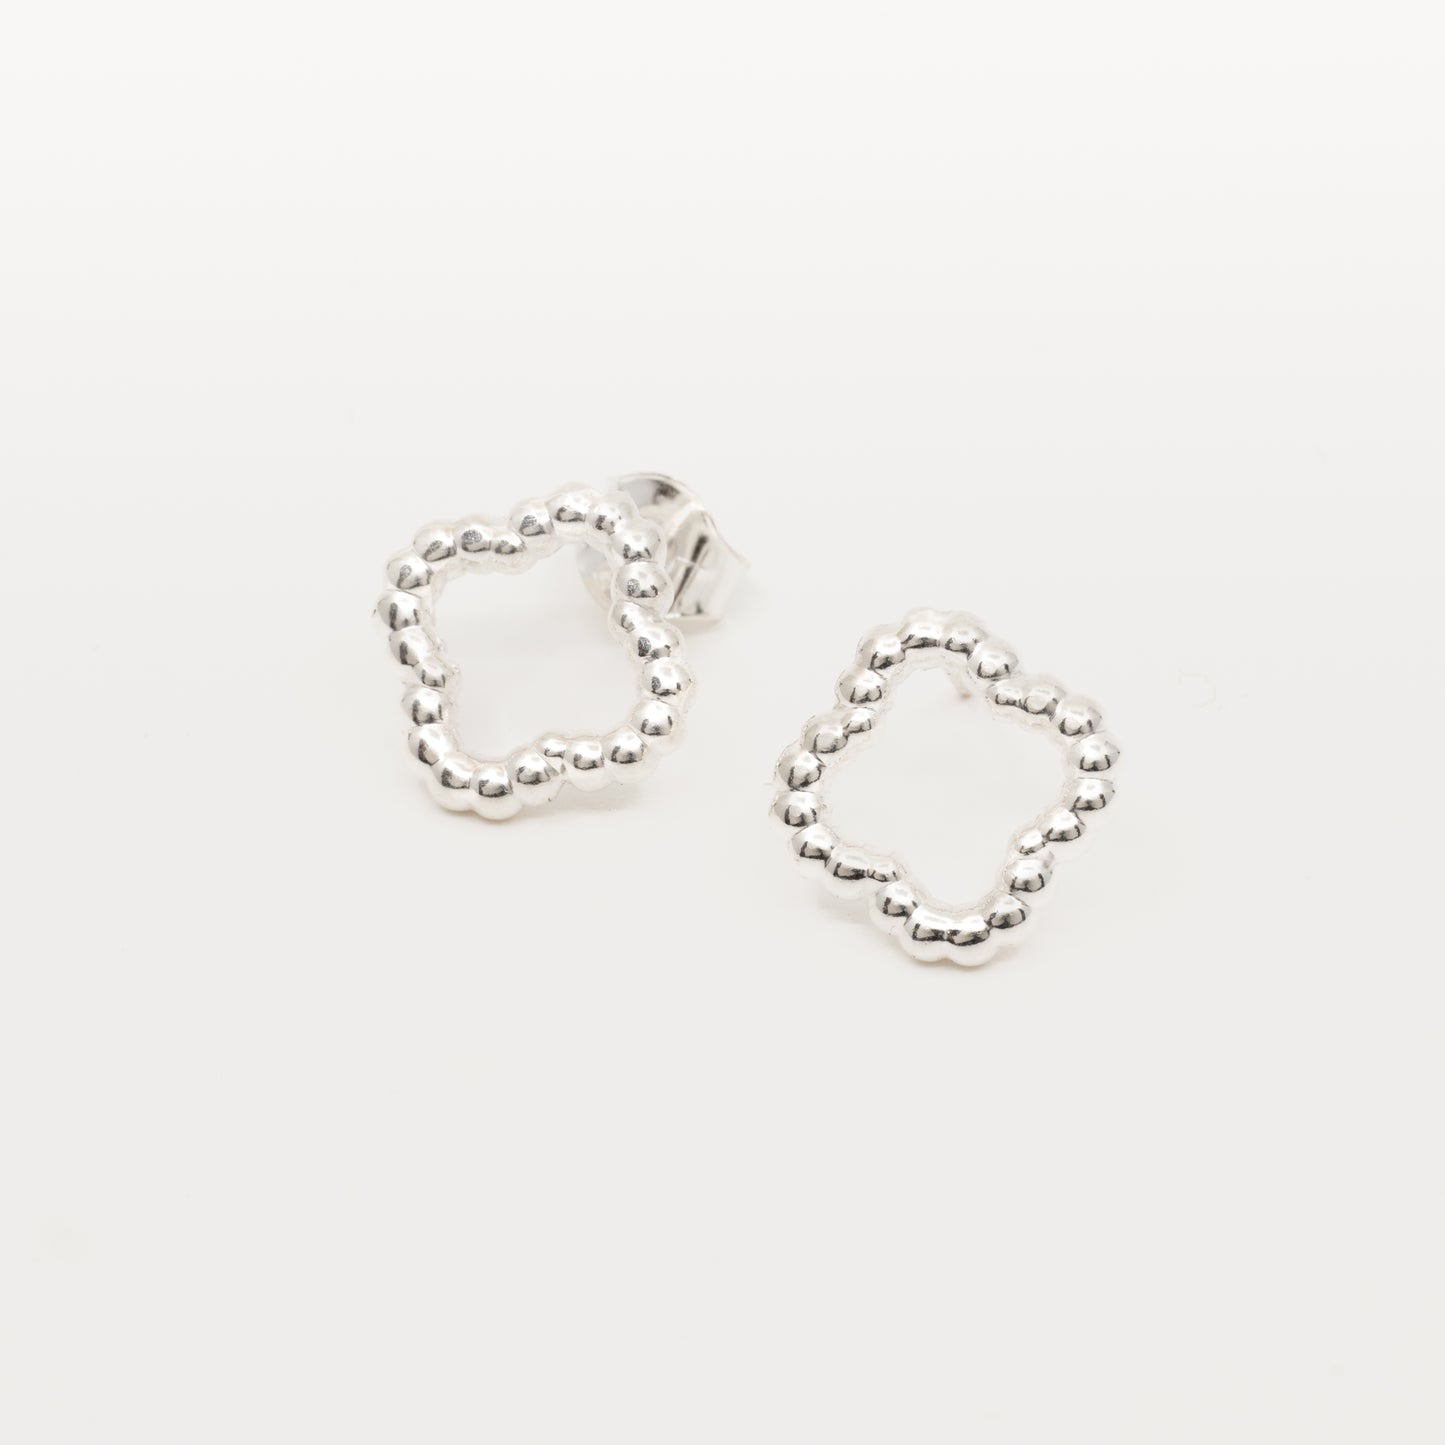 Creo Marbles - Silver earrings